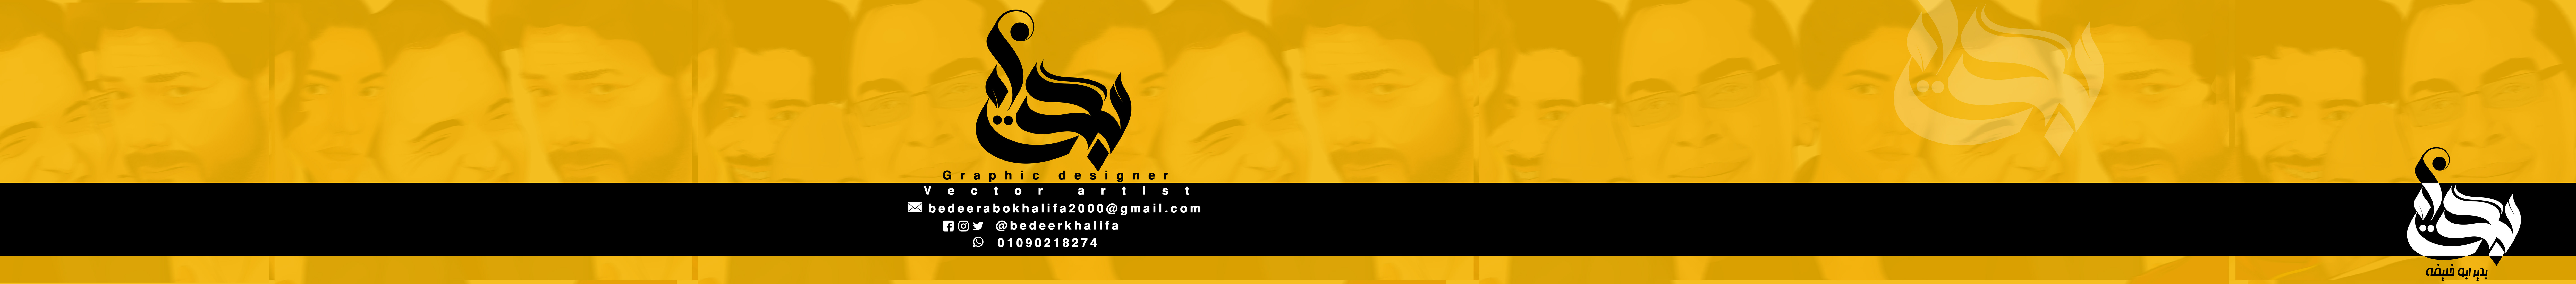 Bedeer Abo-Khalifa's profile banner